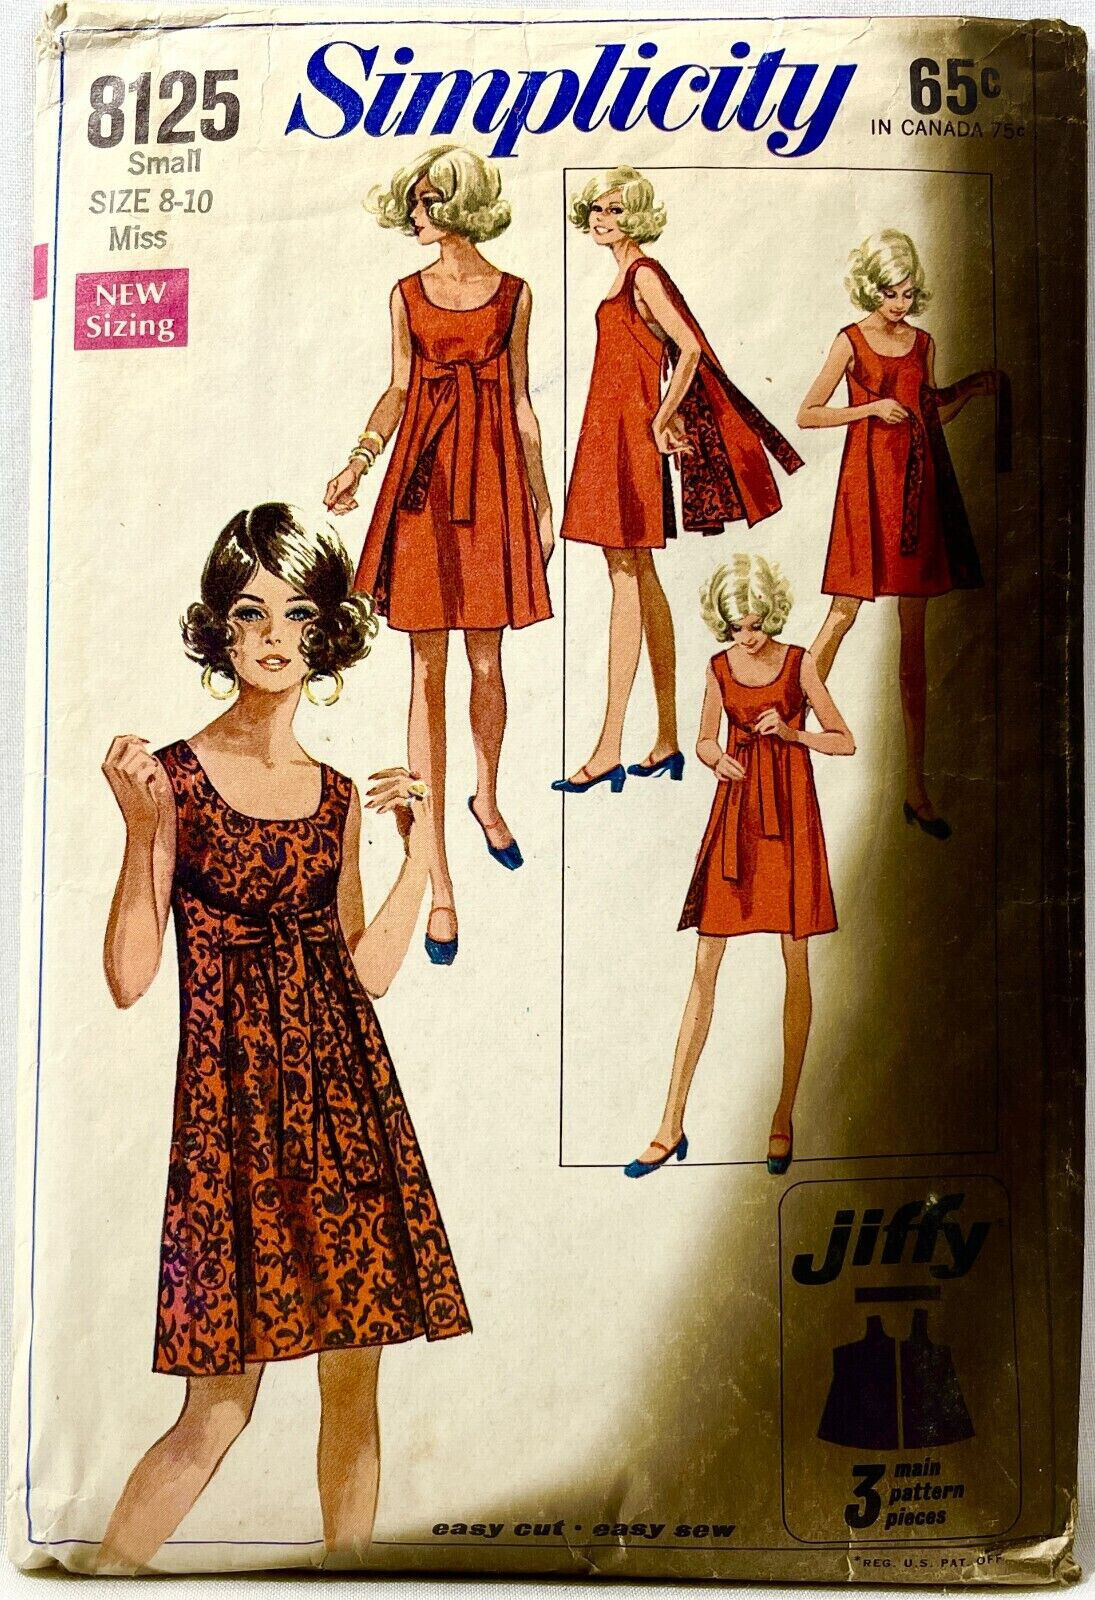 1969 Simplicity Sewing Pattern 8125 Womens Reversible Dress Sz 8-10 Vintag 12894